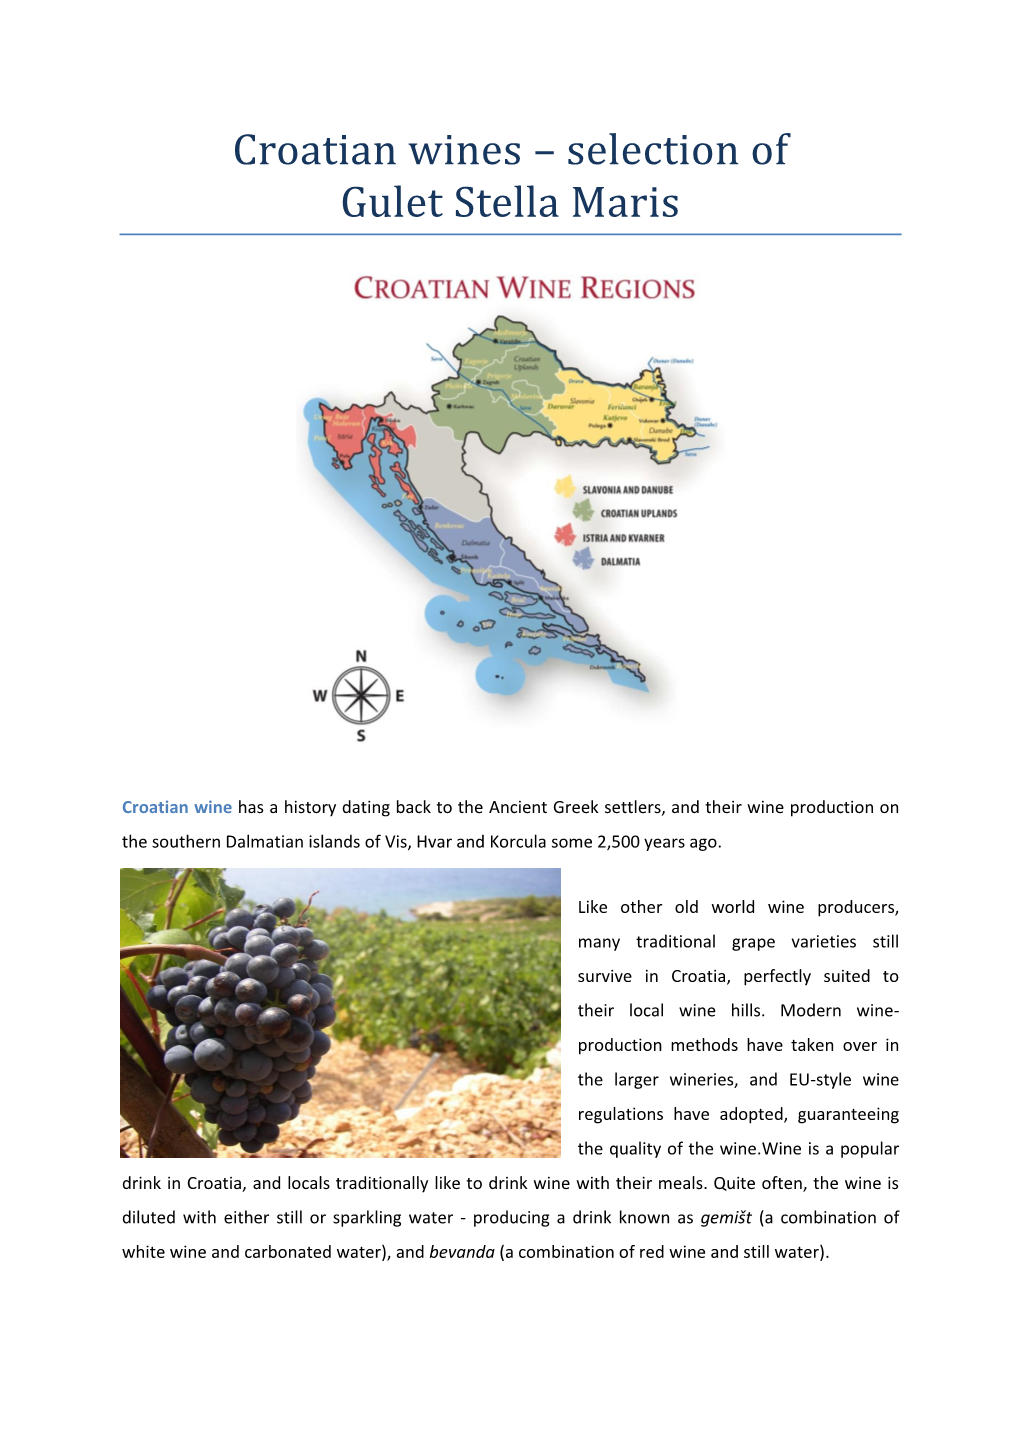 Croatian Wines – Selection of Gulet Stella Maris